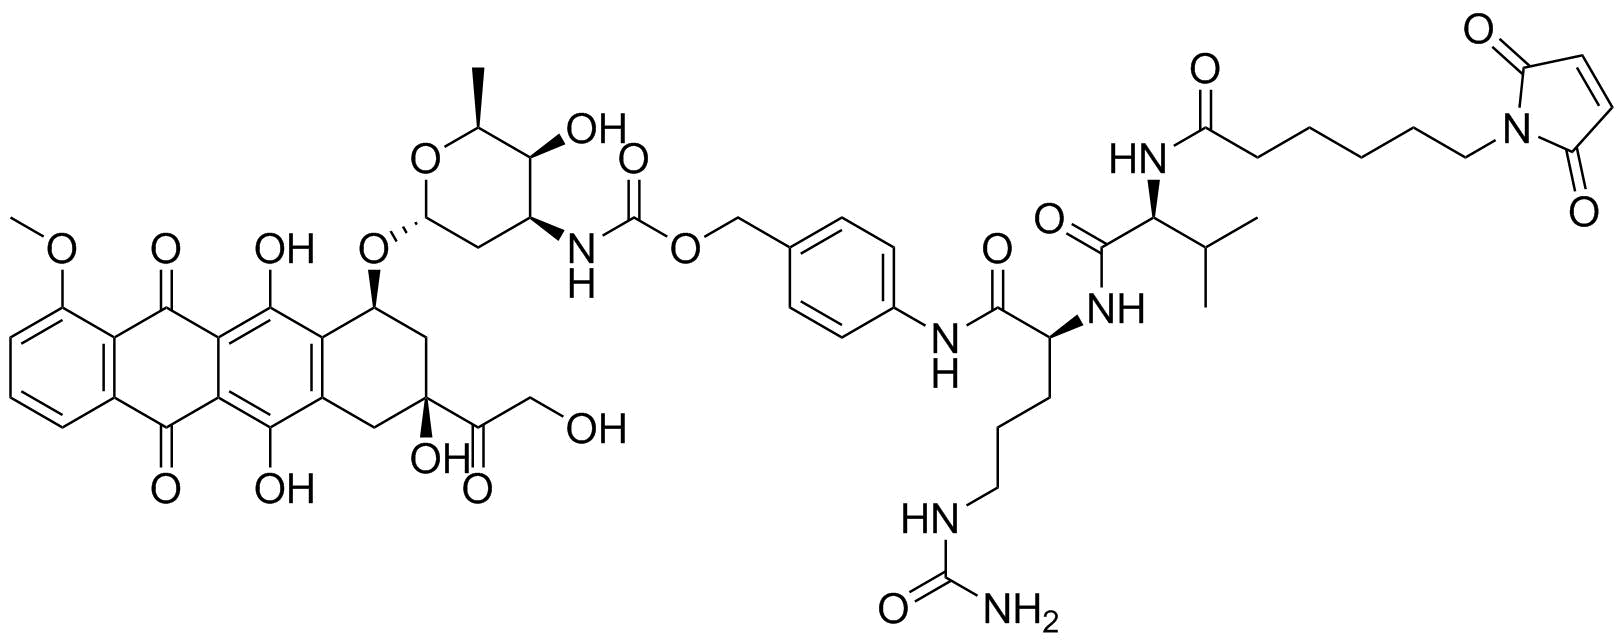 MC-Val-Cit-Doxorubicin